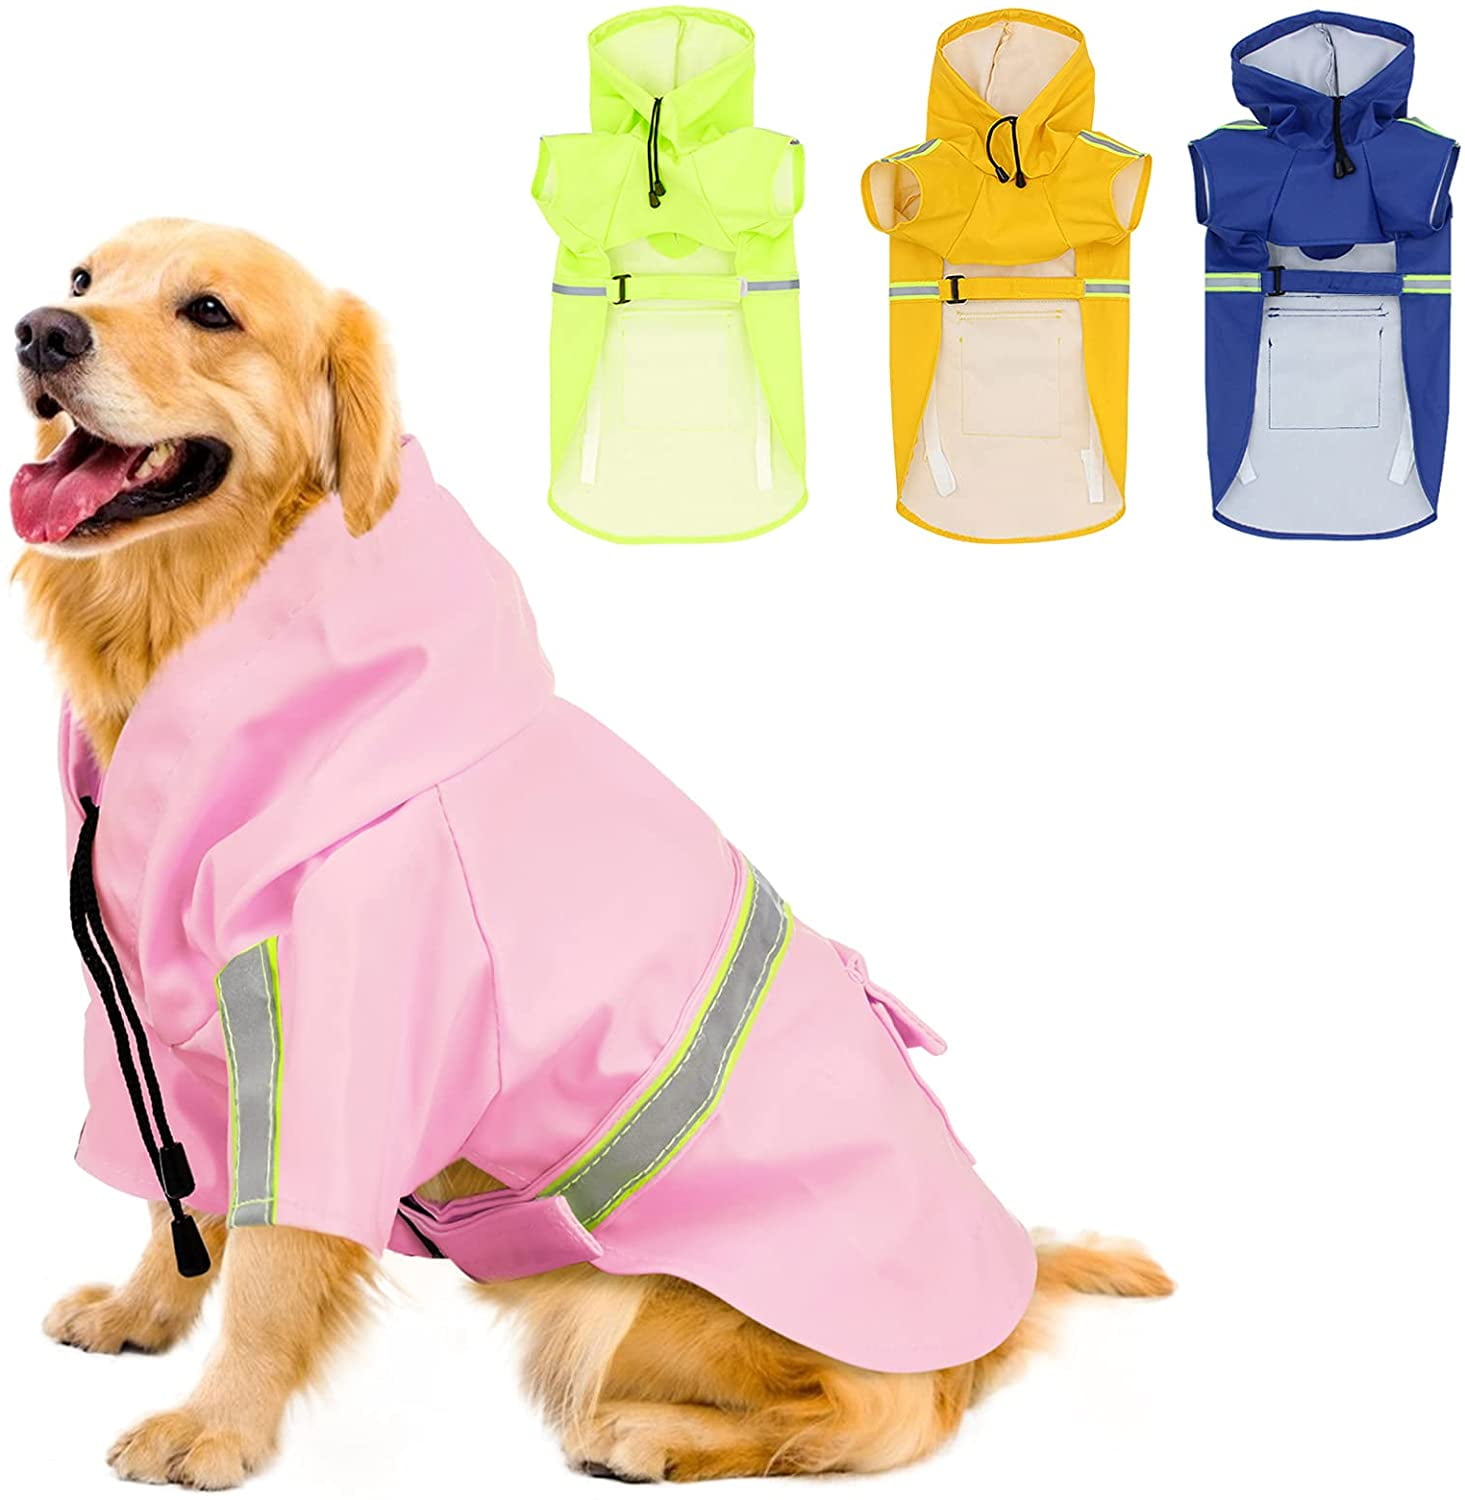 One for Pets Safety Hooded Dog Raincoats Pet Rainwear 24-Inch Dark Blue 